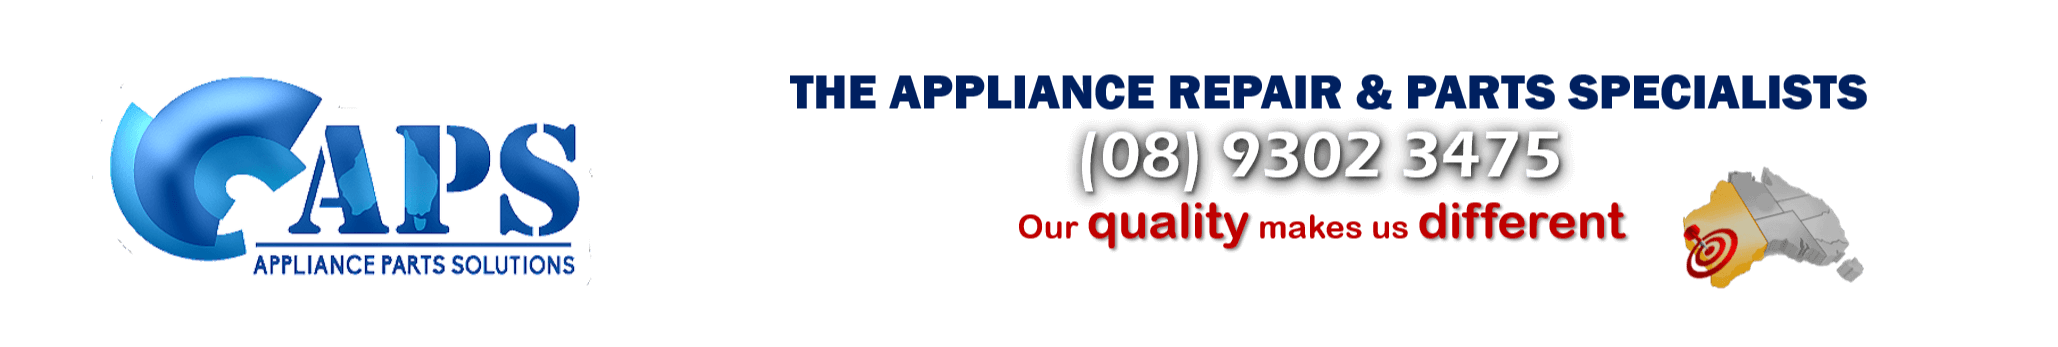 appliance repairs perth